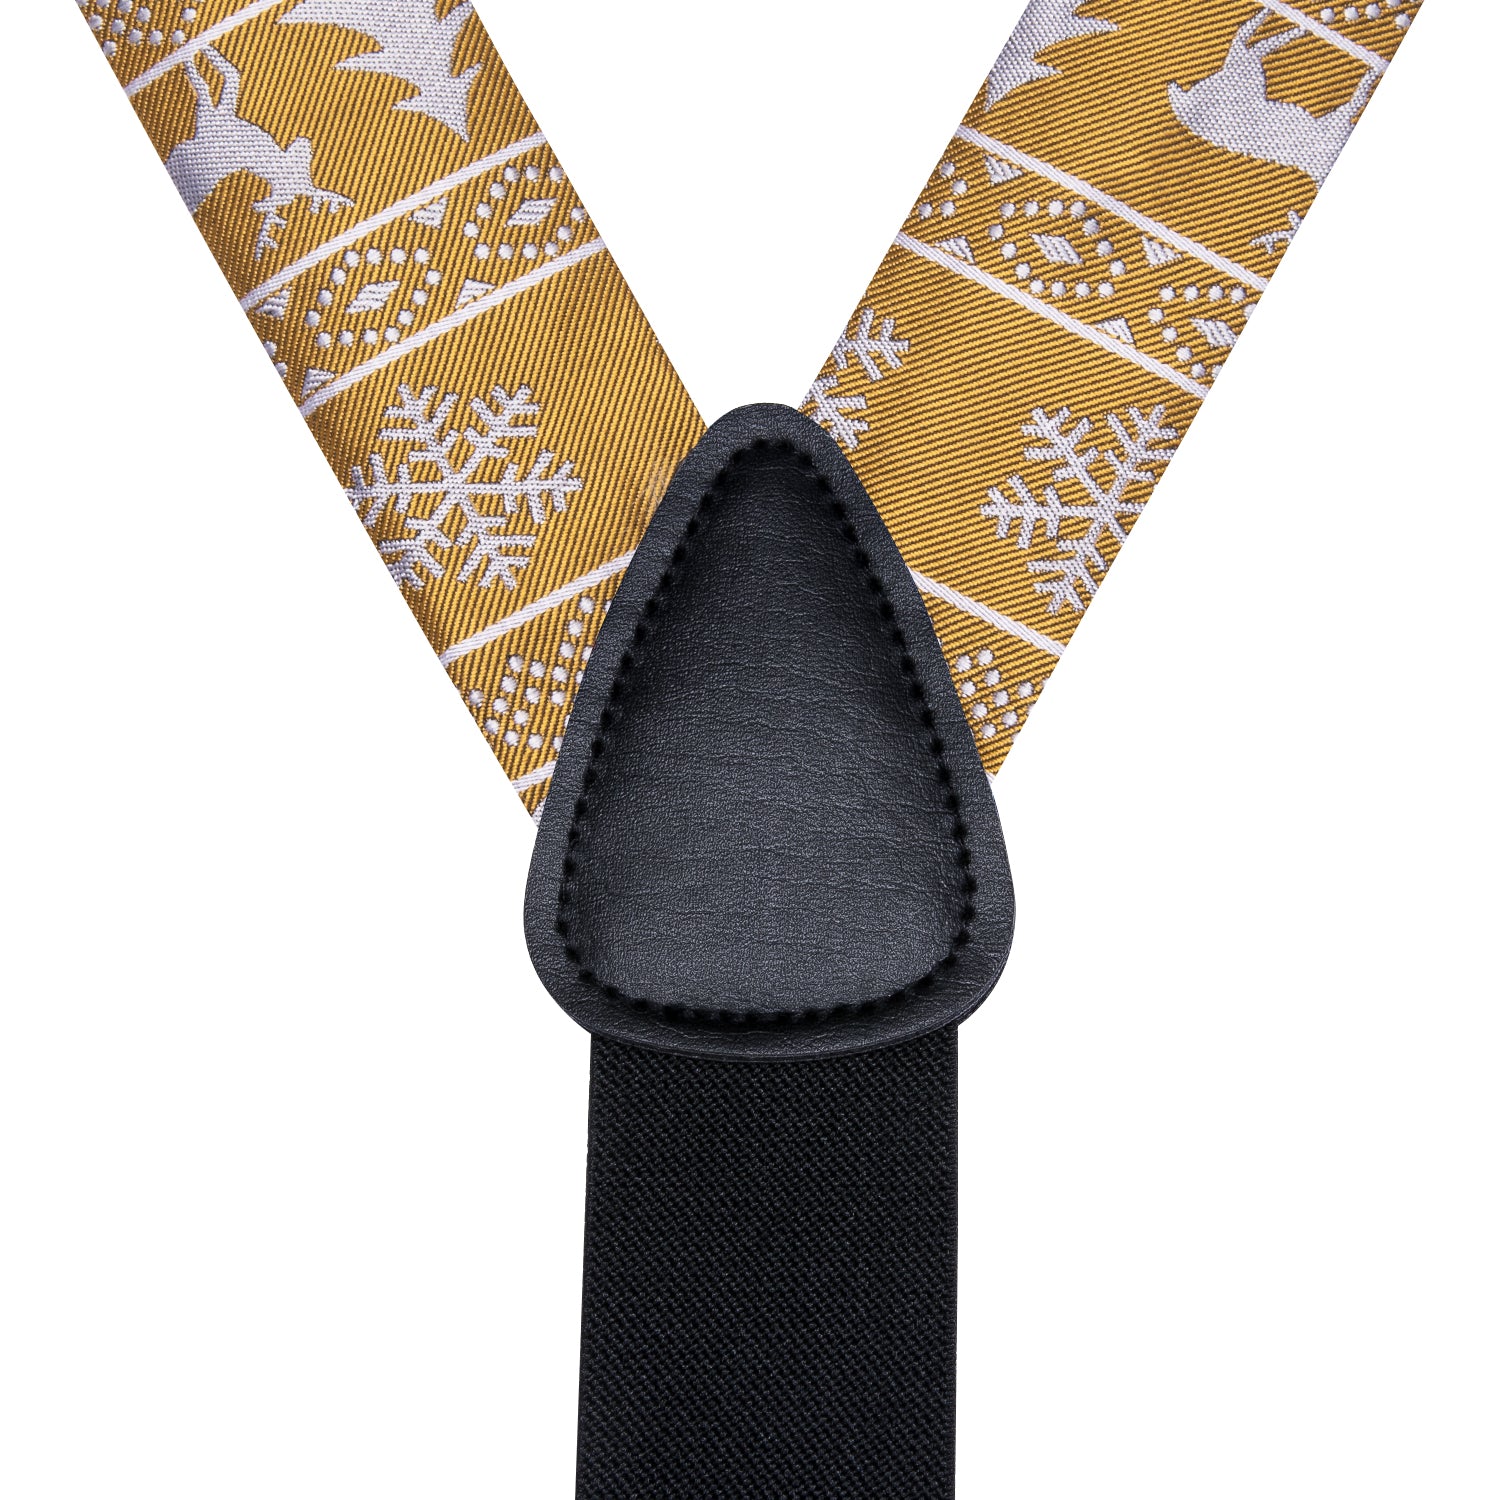 Gold Chritsmas Novelty Suspender Bowtie Hanky Cufflinks Set